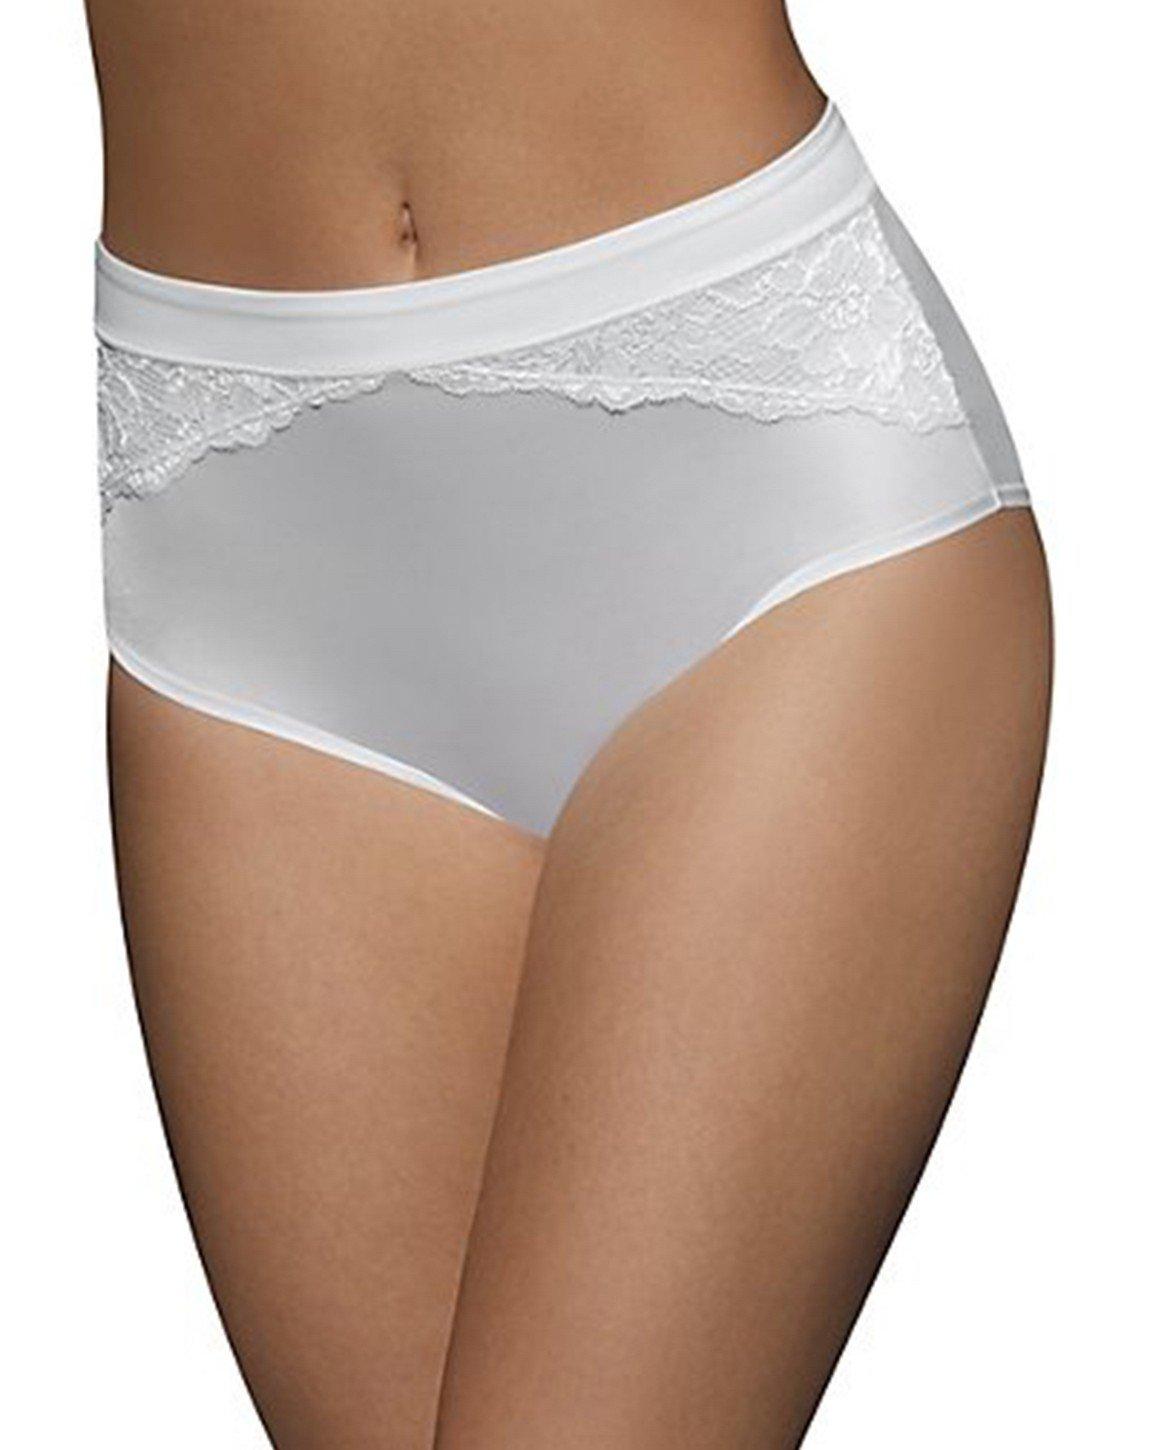 https://cdna.lystit.com/photos/amazon-prime/2042cf43/bali-White-S-One-Smooth-U-Comfort-Indulgence-Satin-With-Lace-Brief-Panty.jpeg